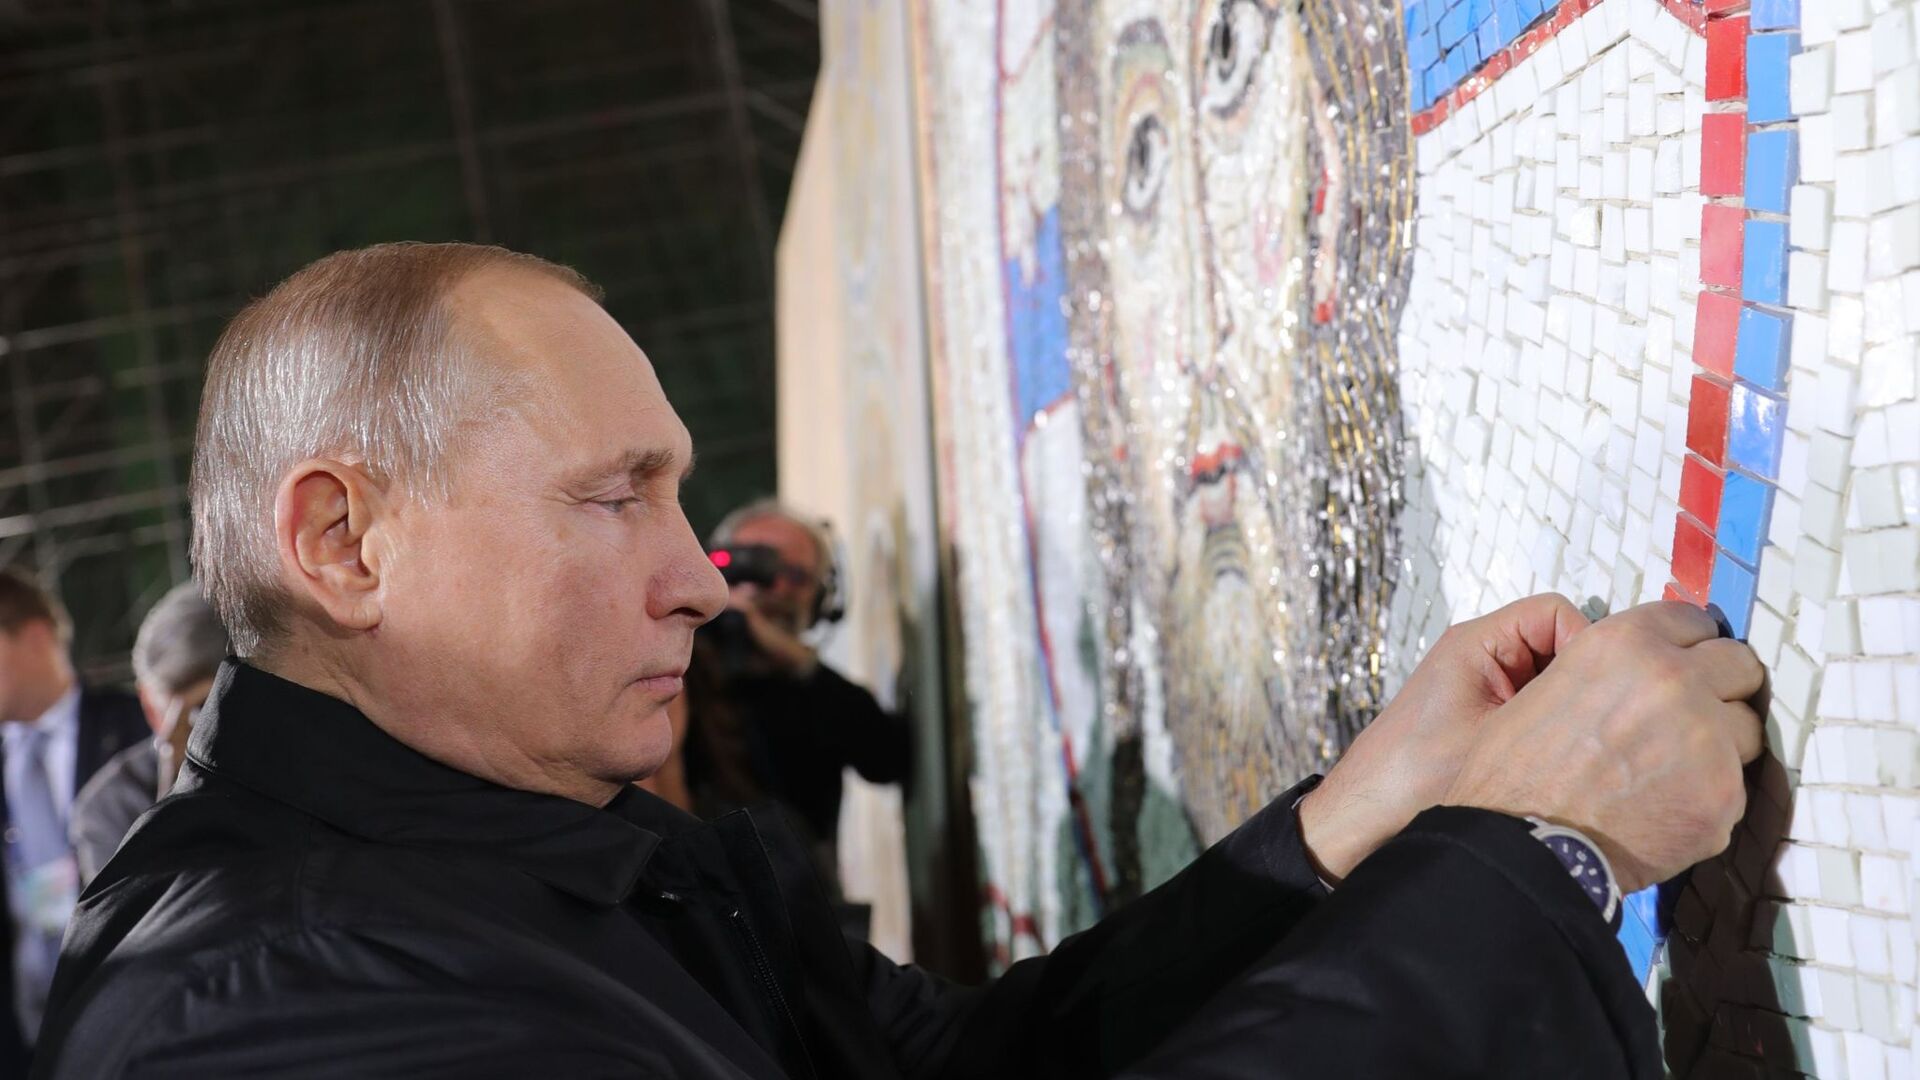 Мозаика Путина Фото